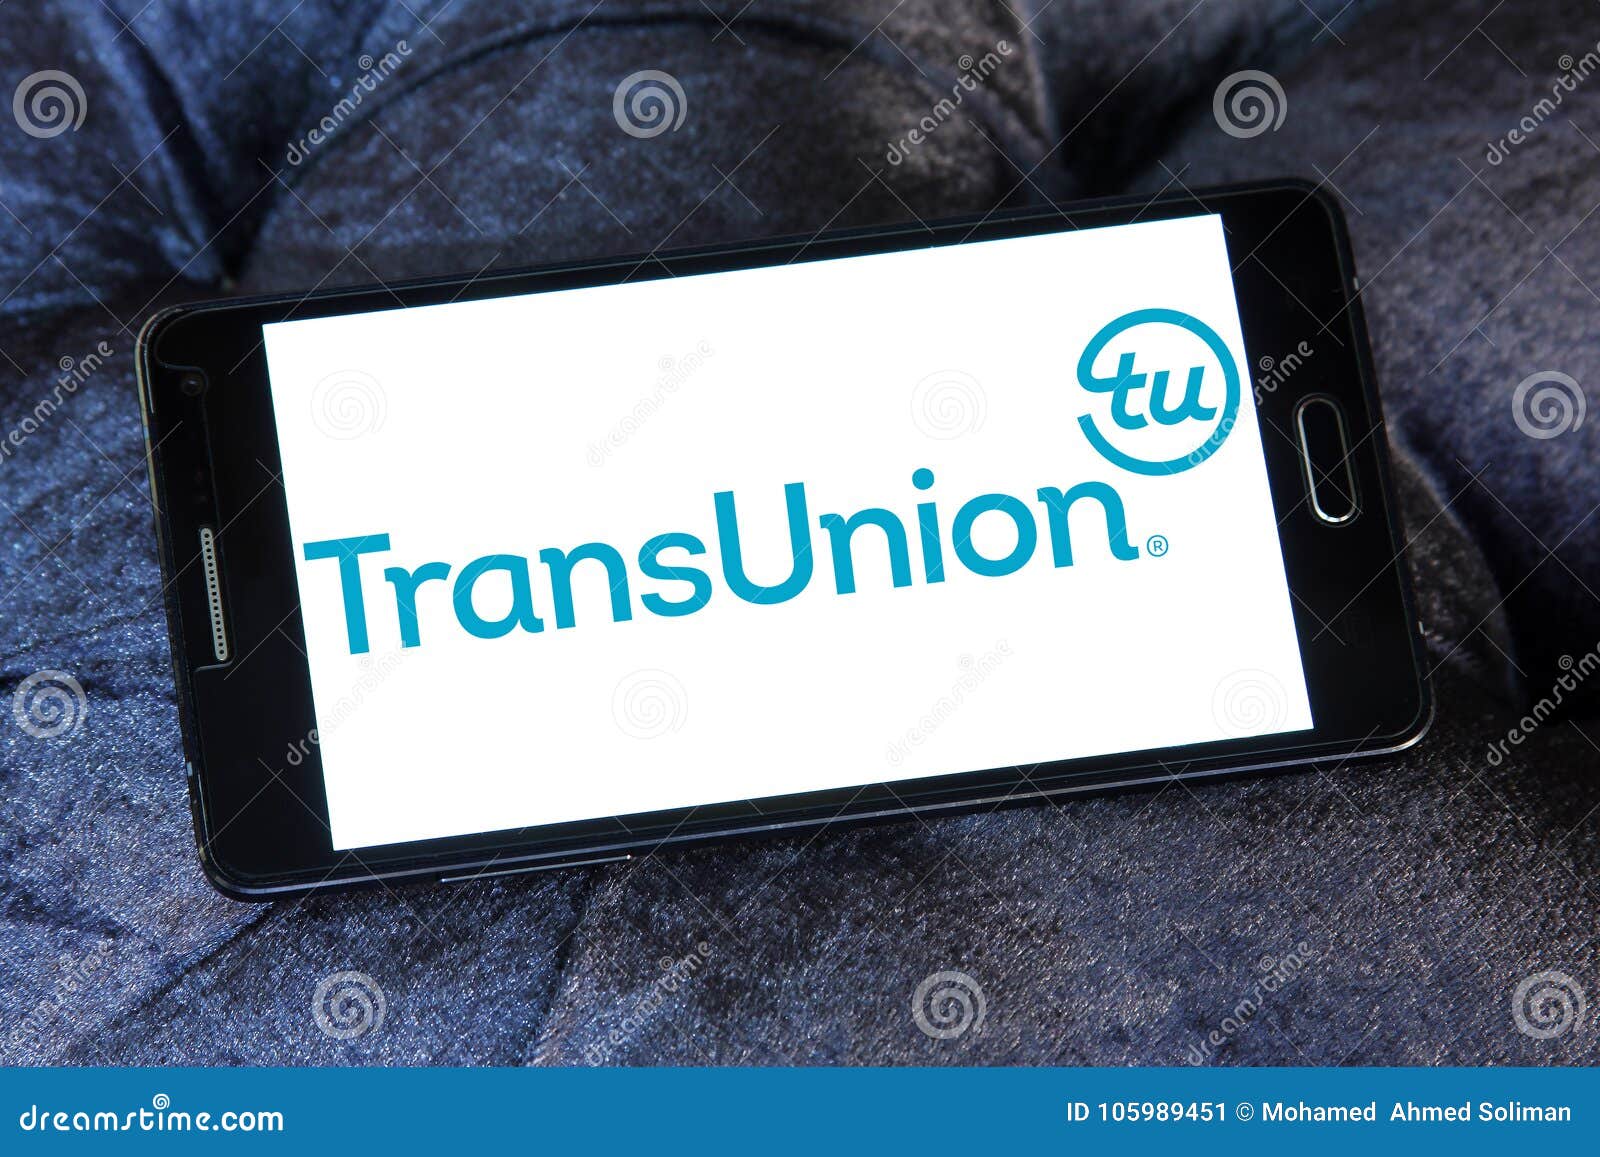 TransUnion Information Technology Company Logo Editorial Photo - Image ...